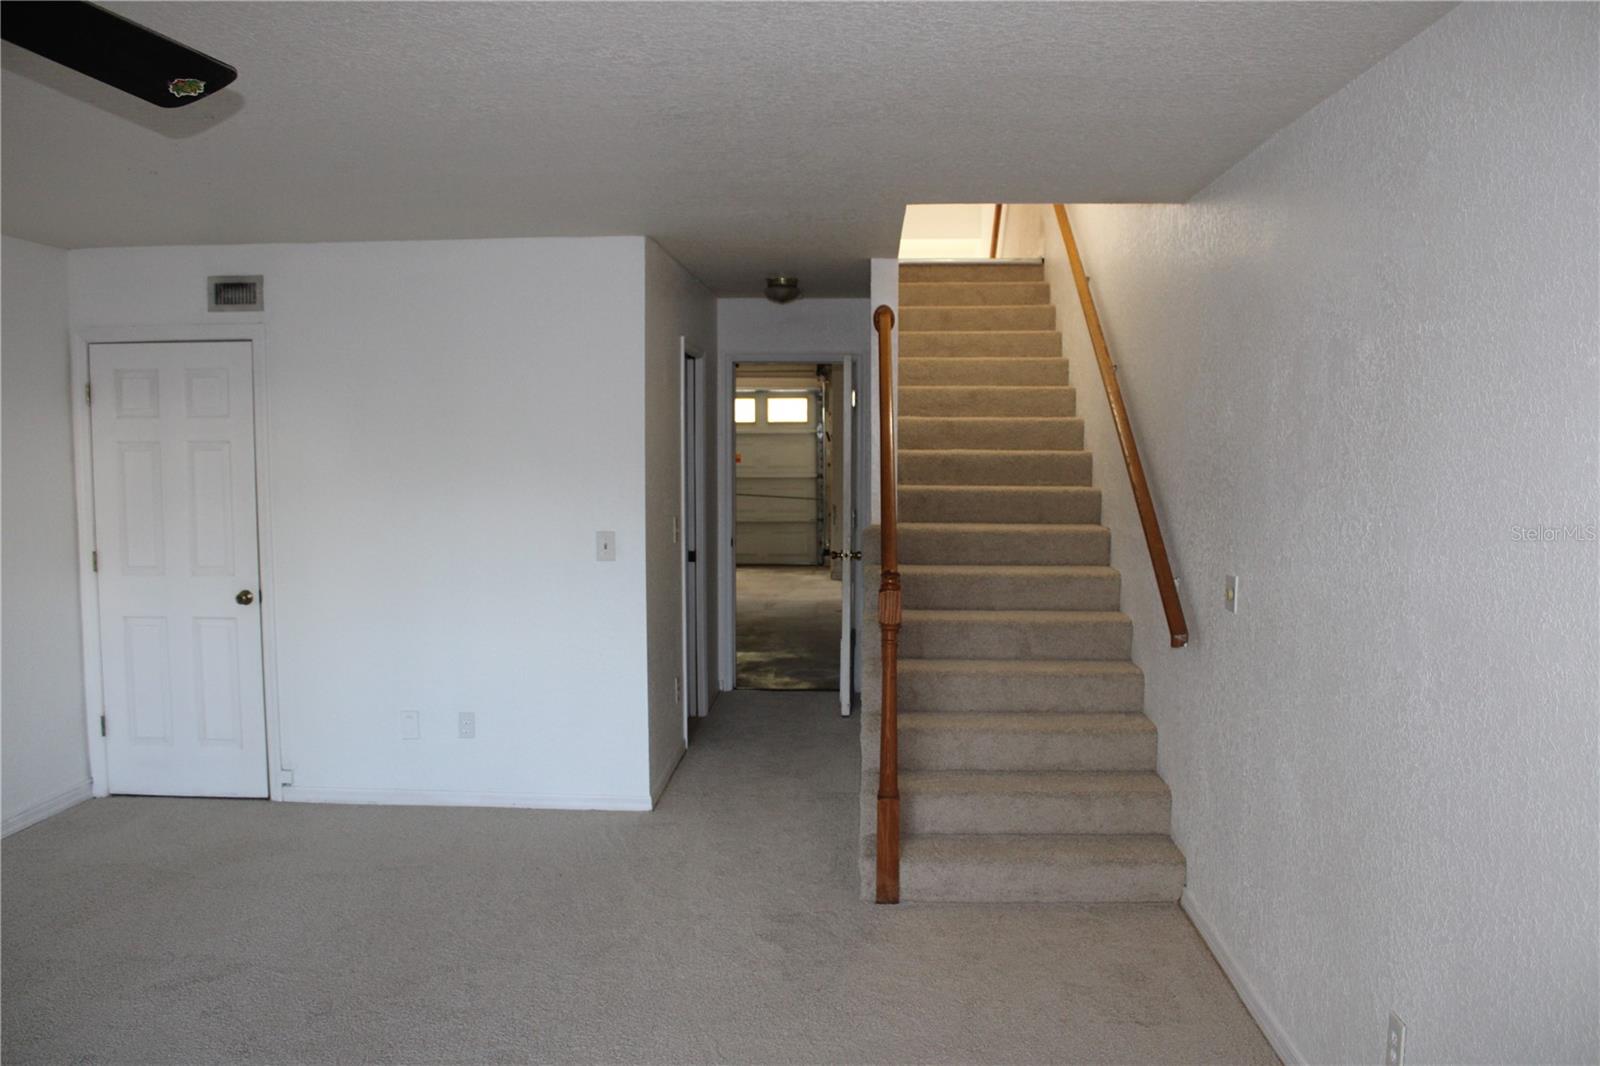 Lower floor bonus room and stairway up to main floor